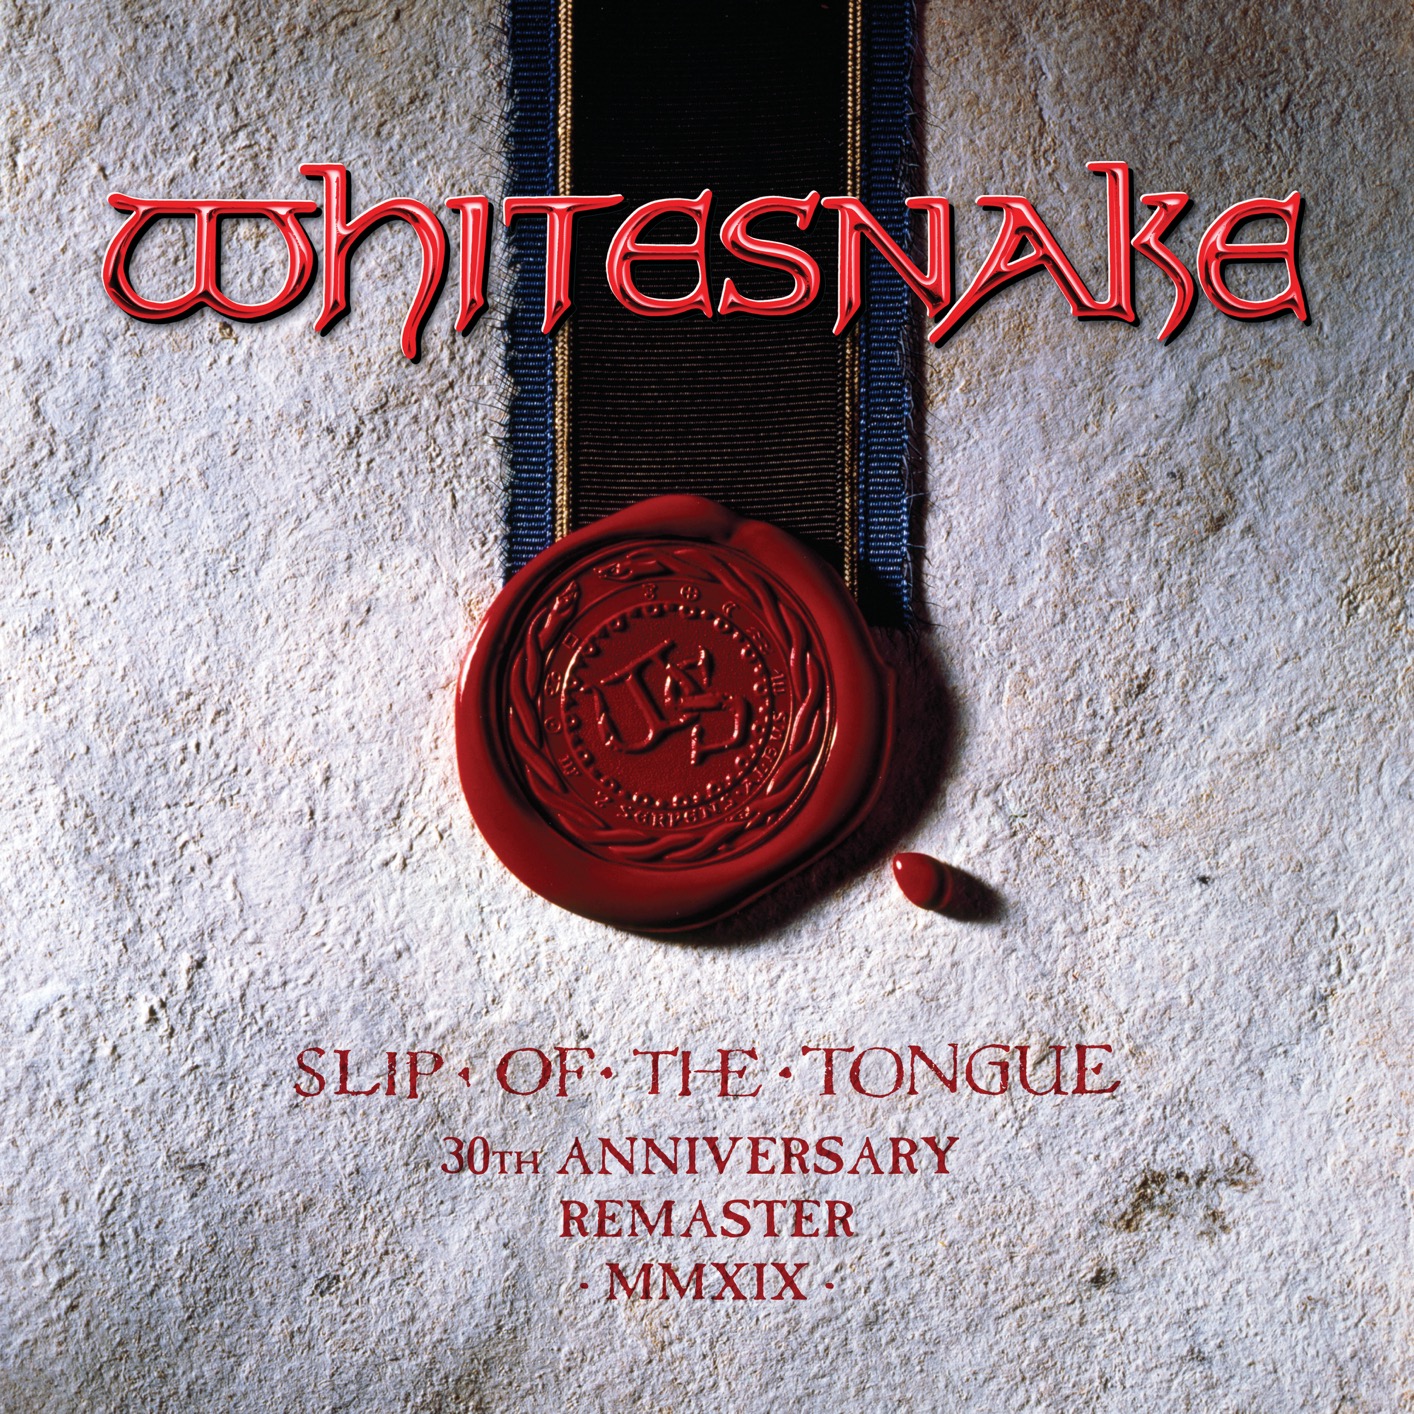 Whitesnake – Slip Of The Tongue (Remaster) (1989/2019) [FLAC 24bit/96kHz]